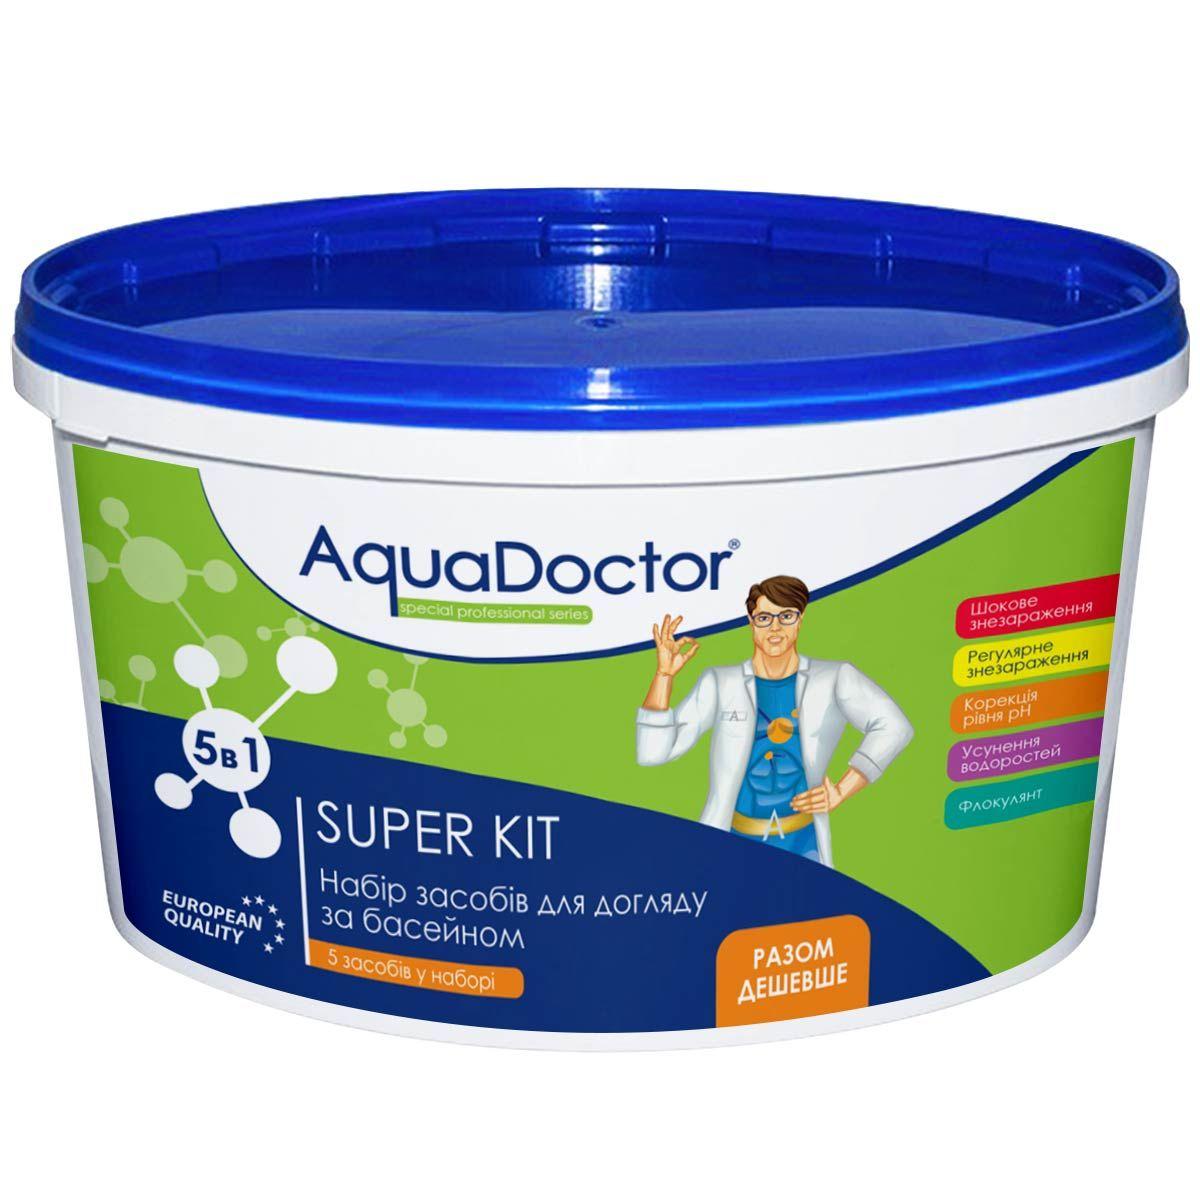 Плавайте безпечно та приємно з хімією AquaDoctor